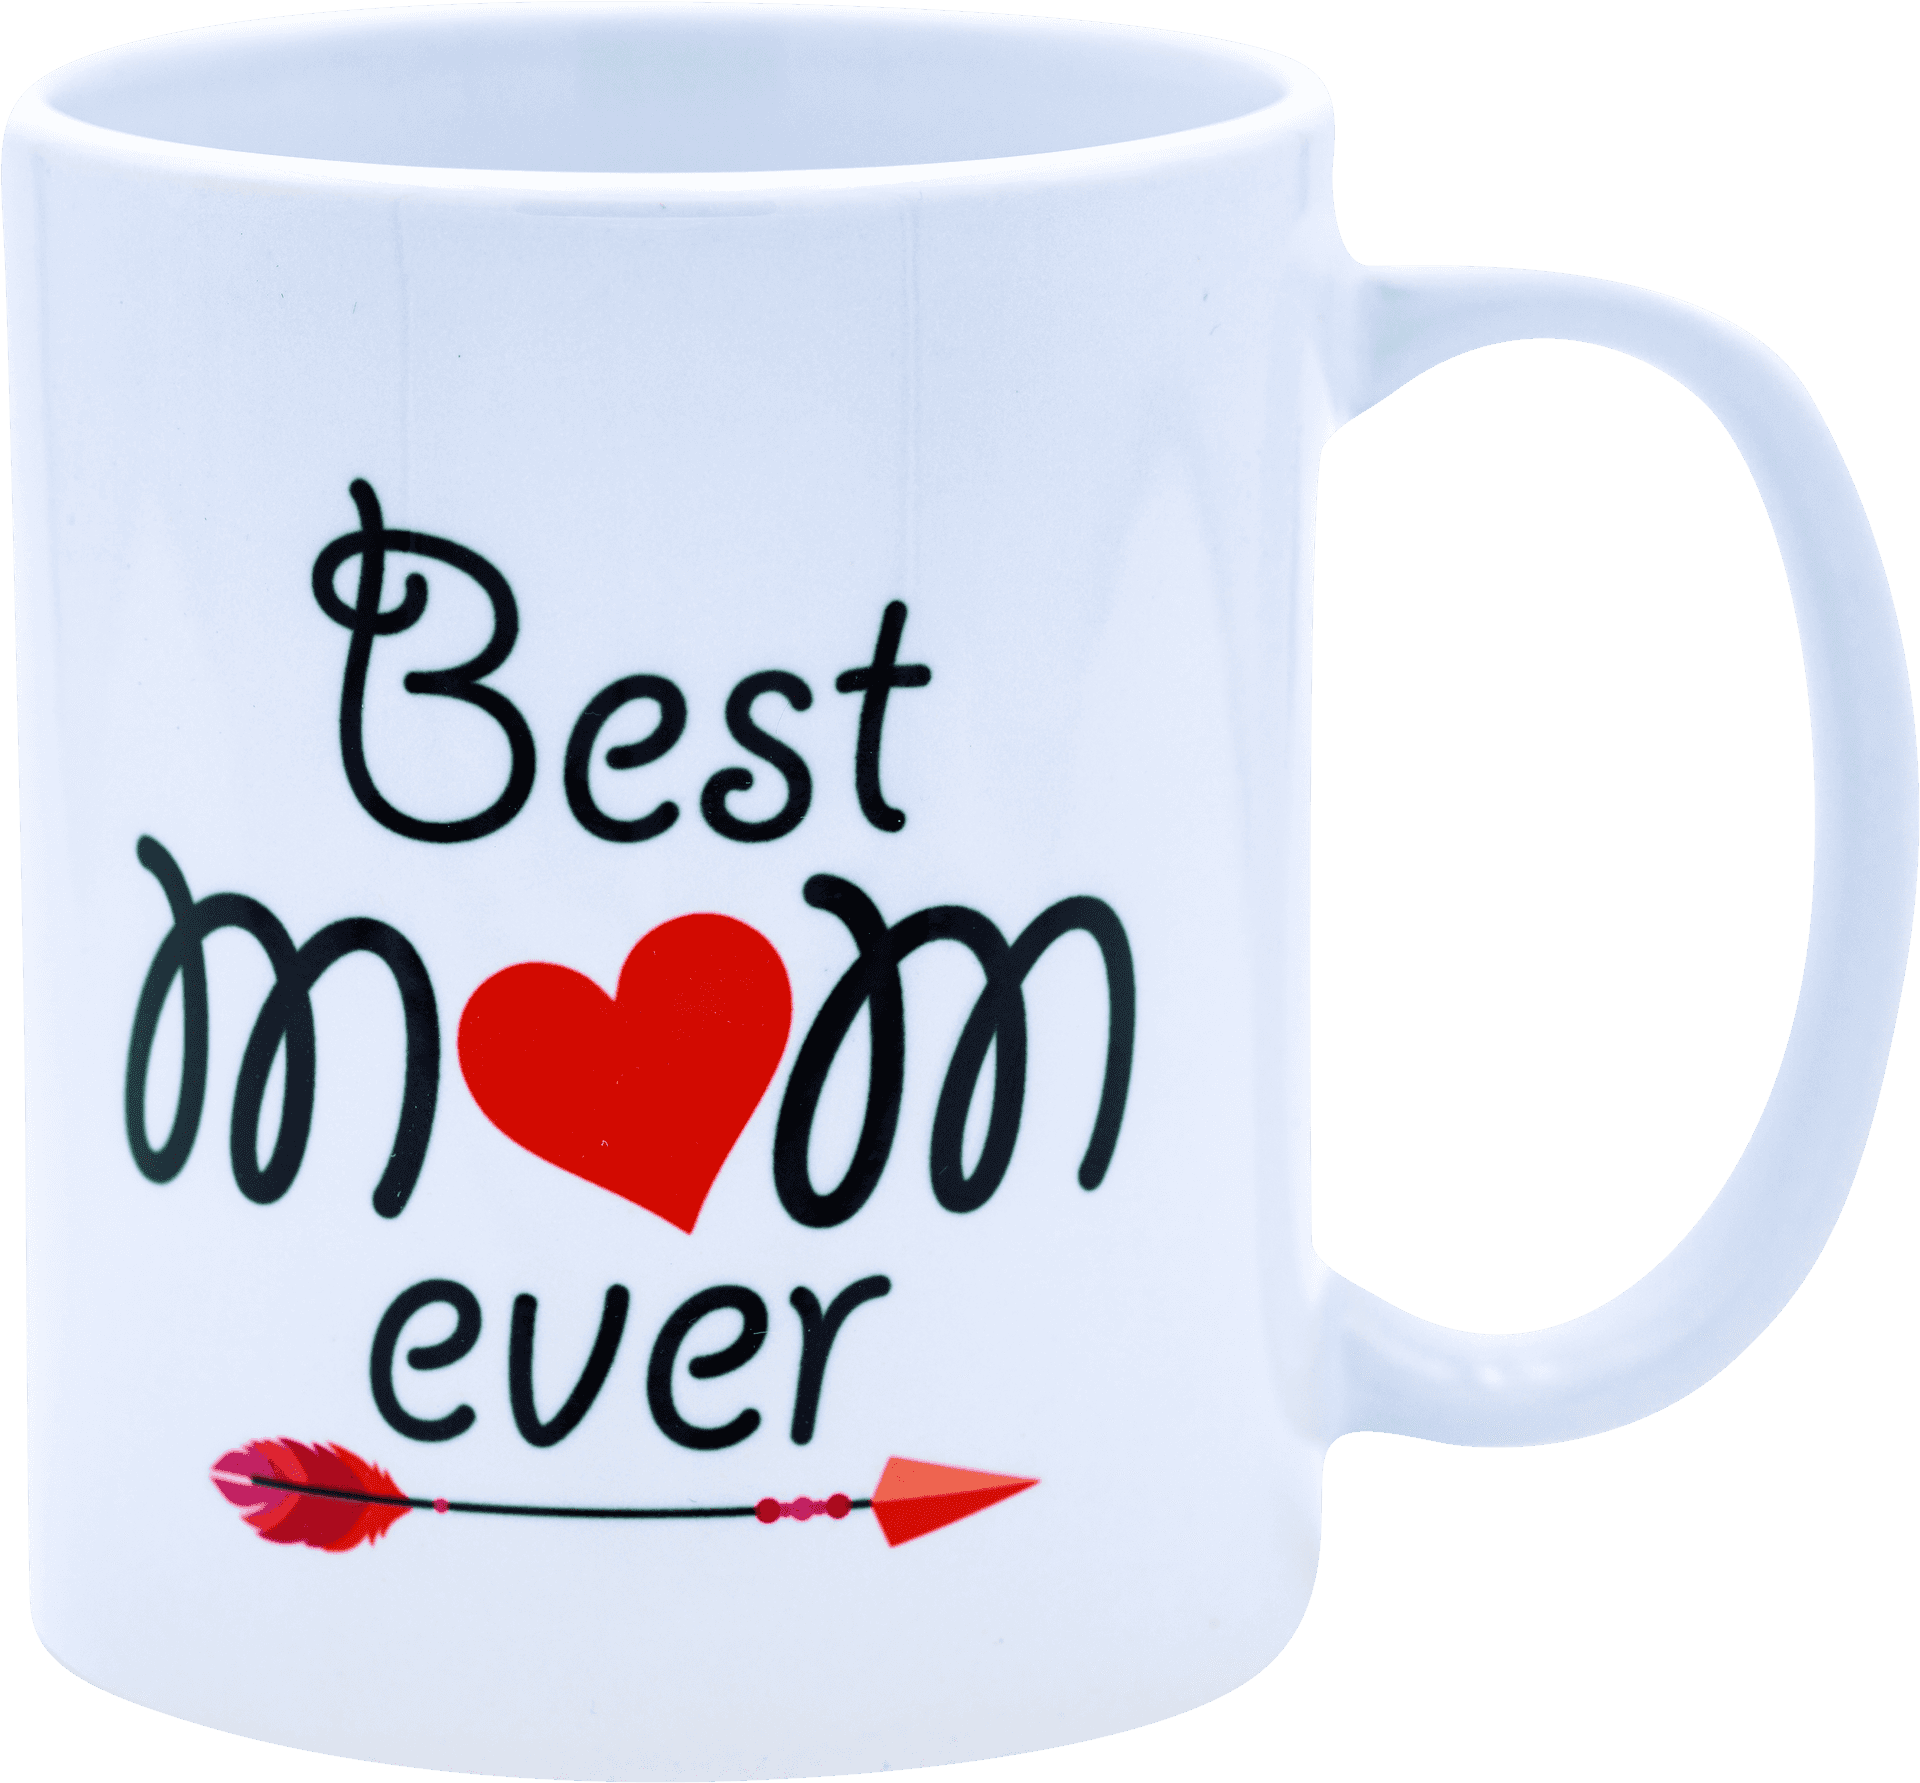 Best Mom Ever Coffee Mug PNG image